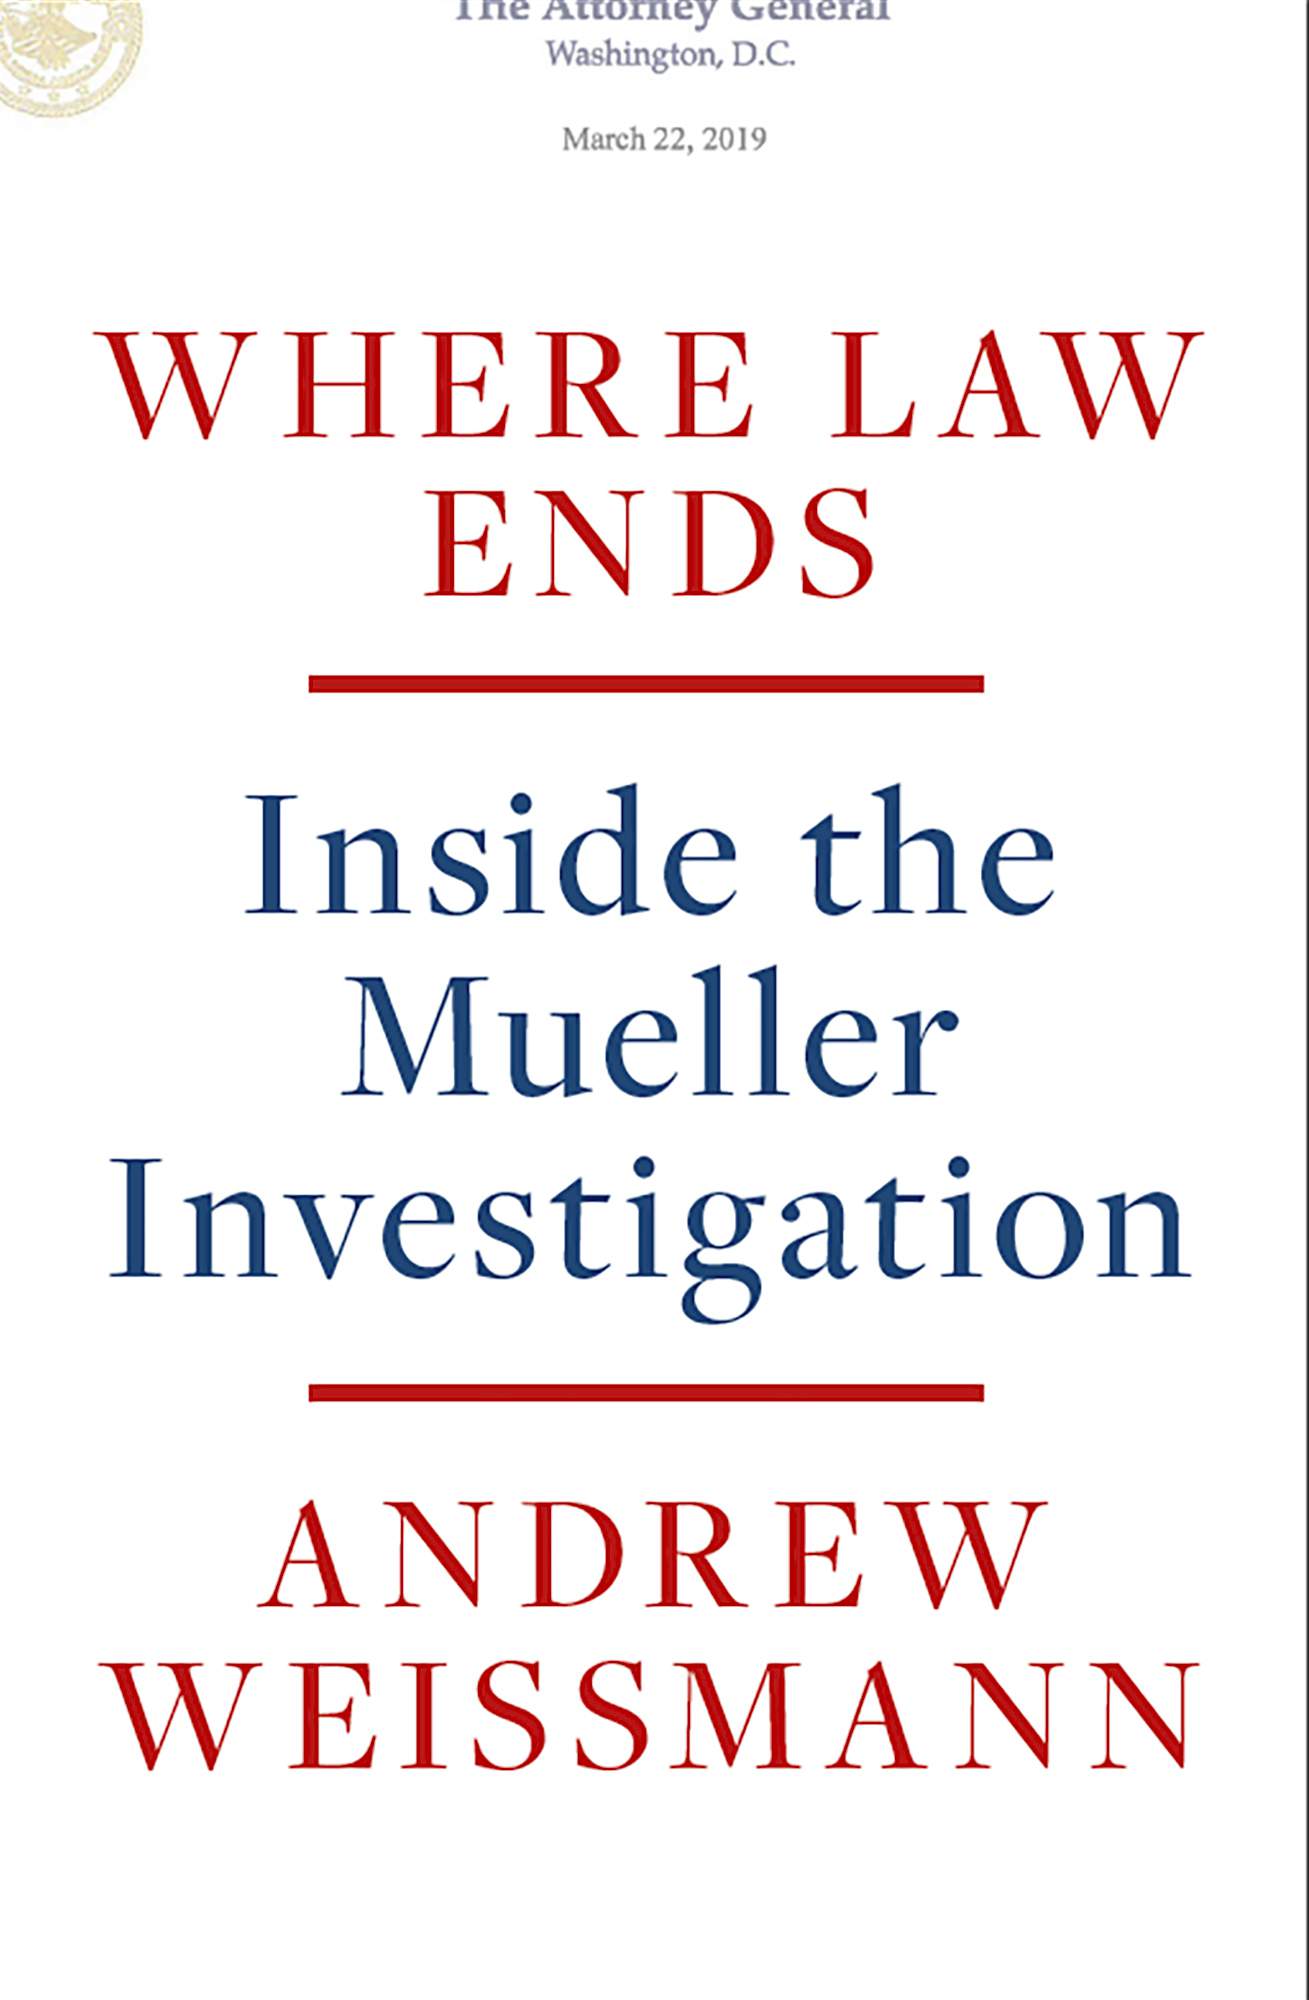 Former Mueller prosecutor writing book on investigation